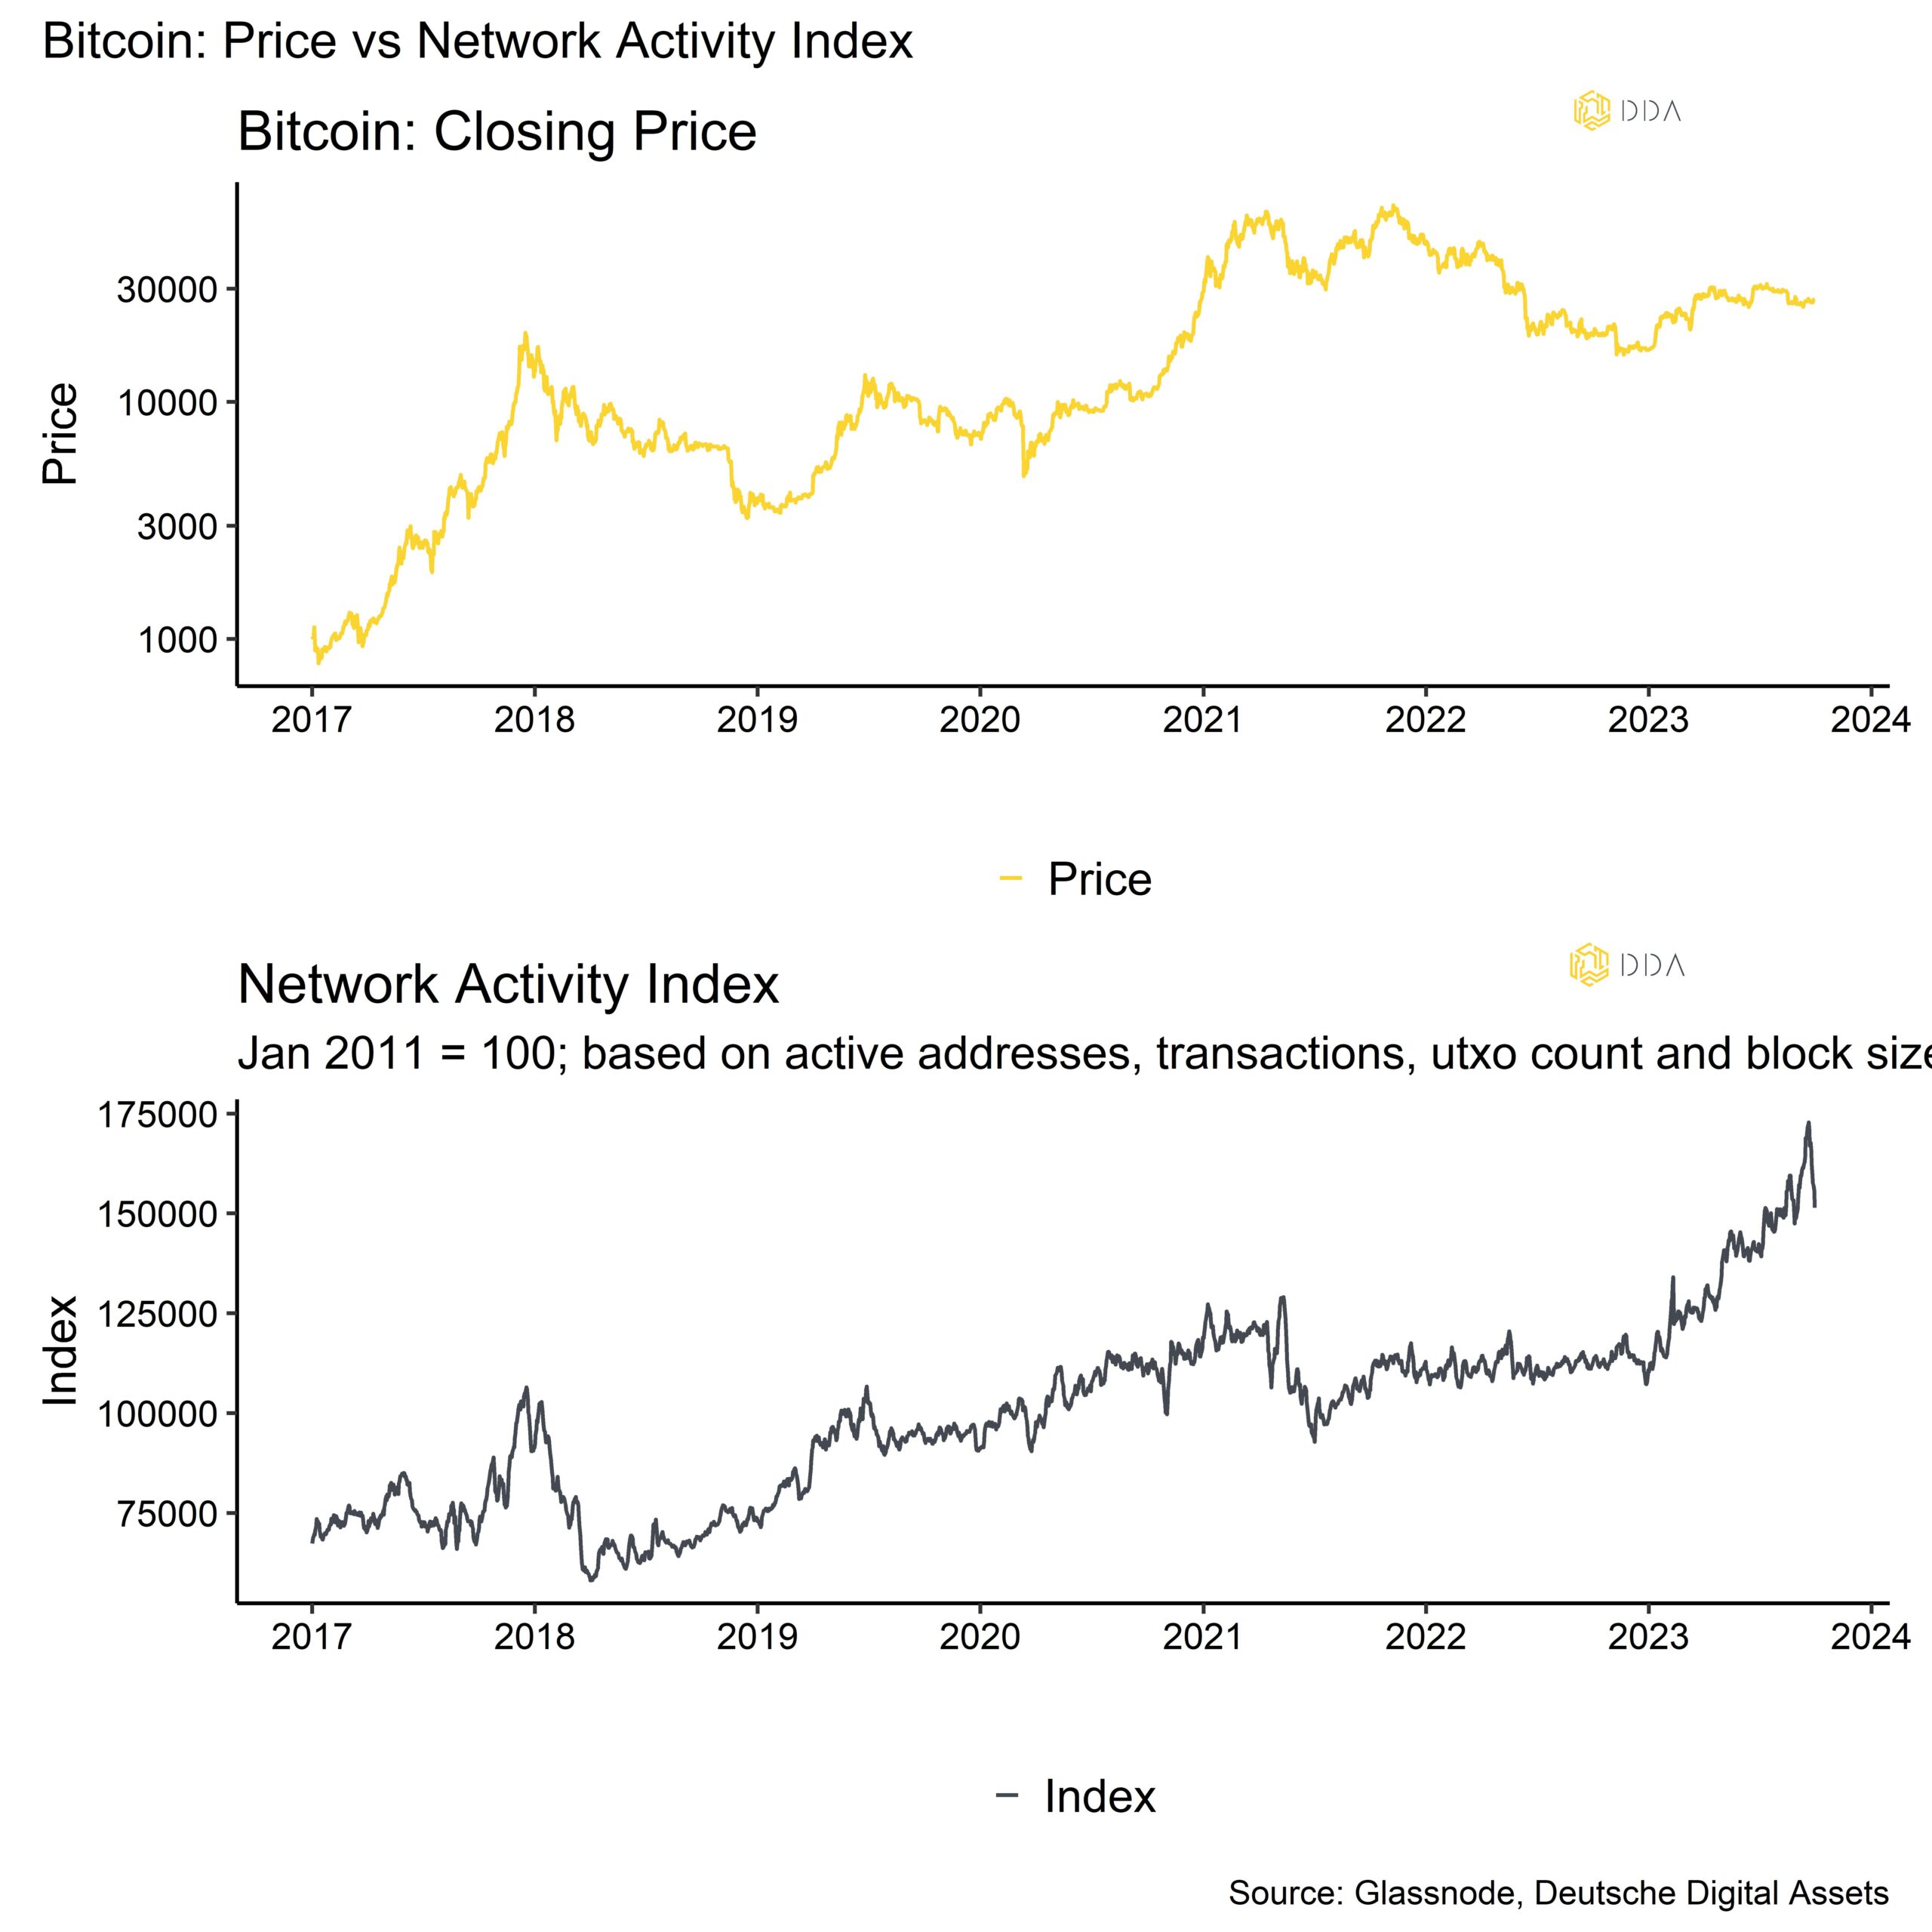 Bitcoin: Price vs Network Activity Index